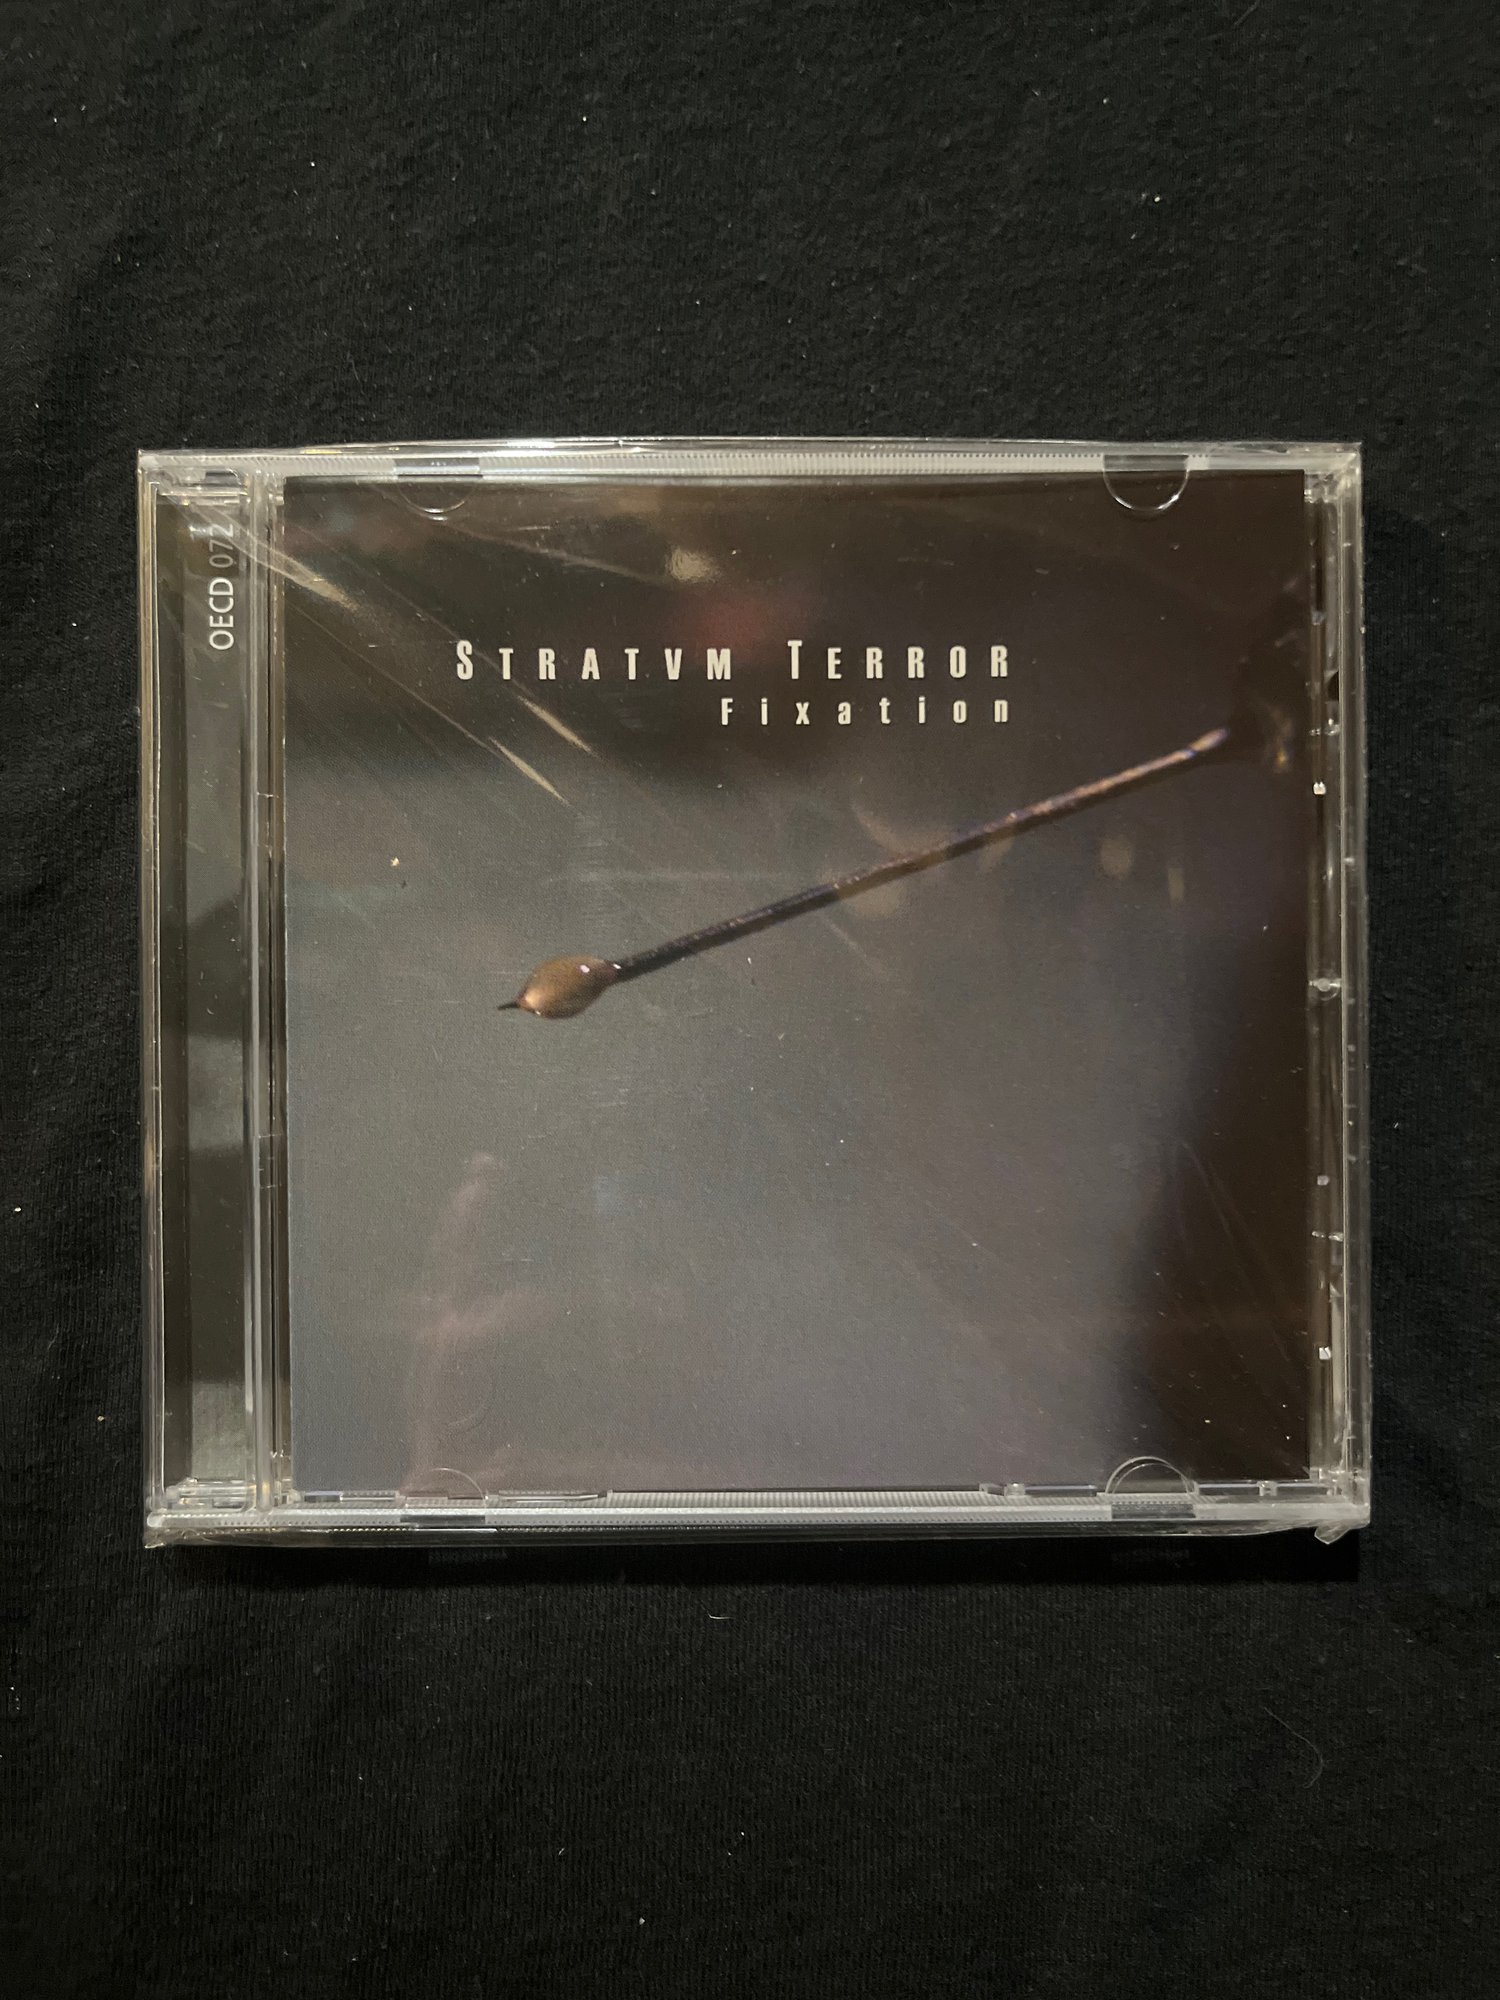 Stratvm Terror – Fixation CD (OEC)